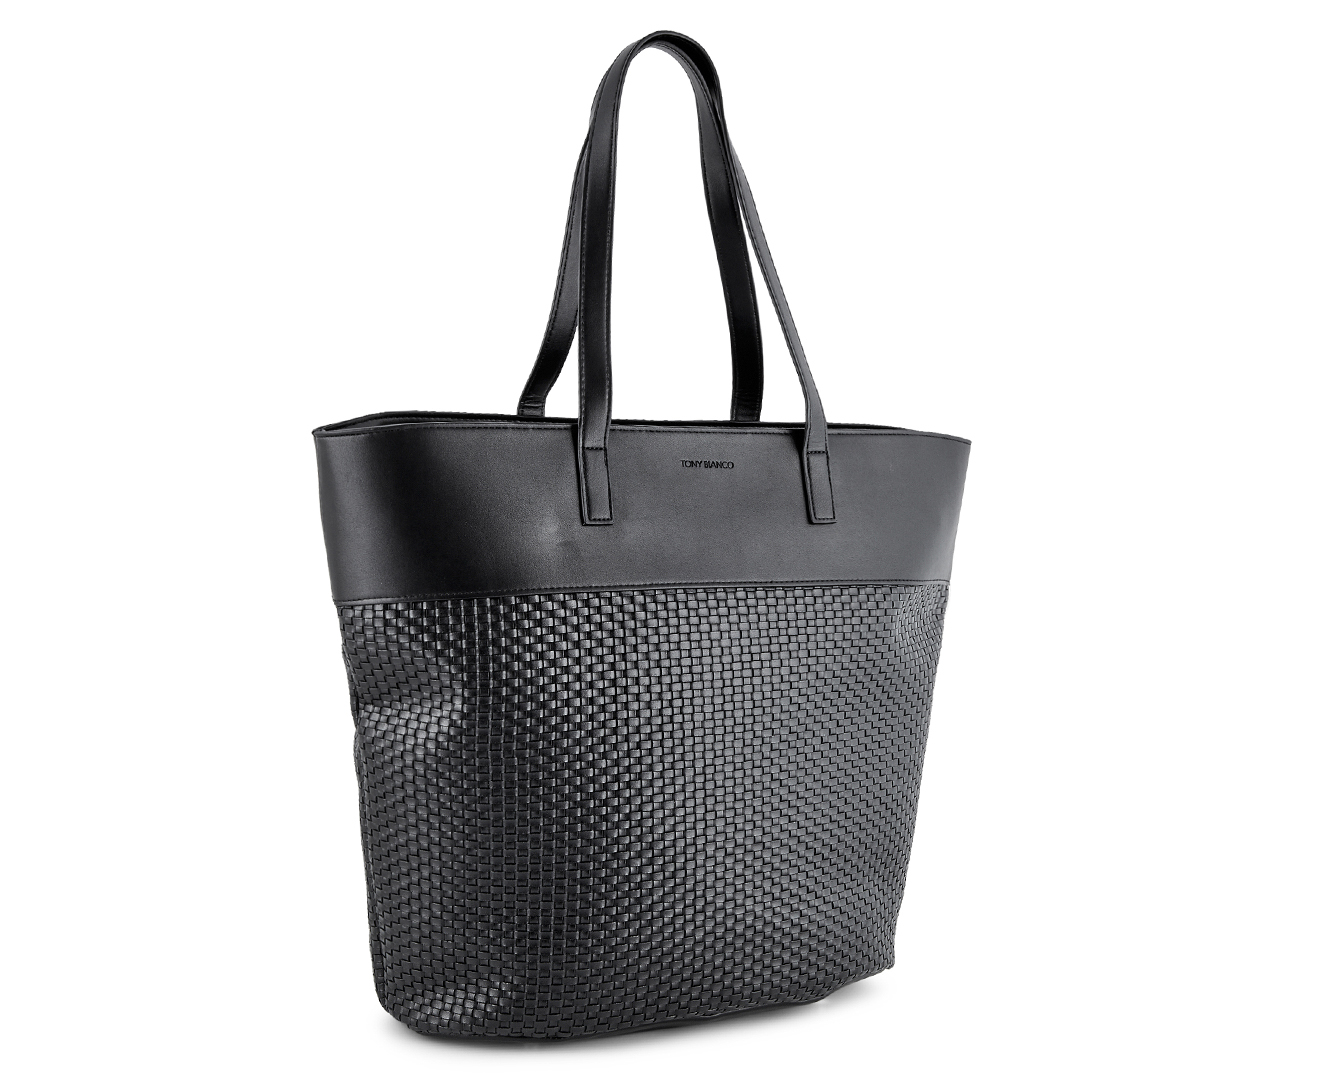 Tony Bianco Gianni Tote Bag - Black | Scoopon Shopping